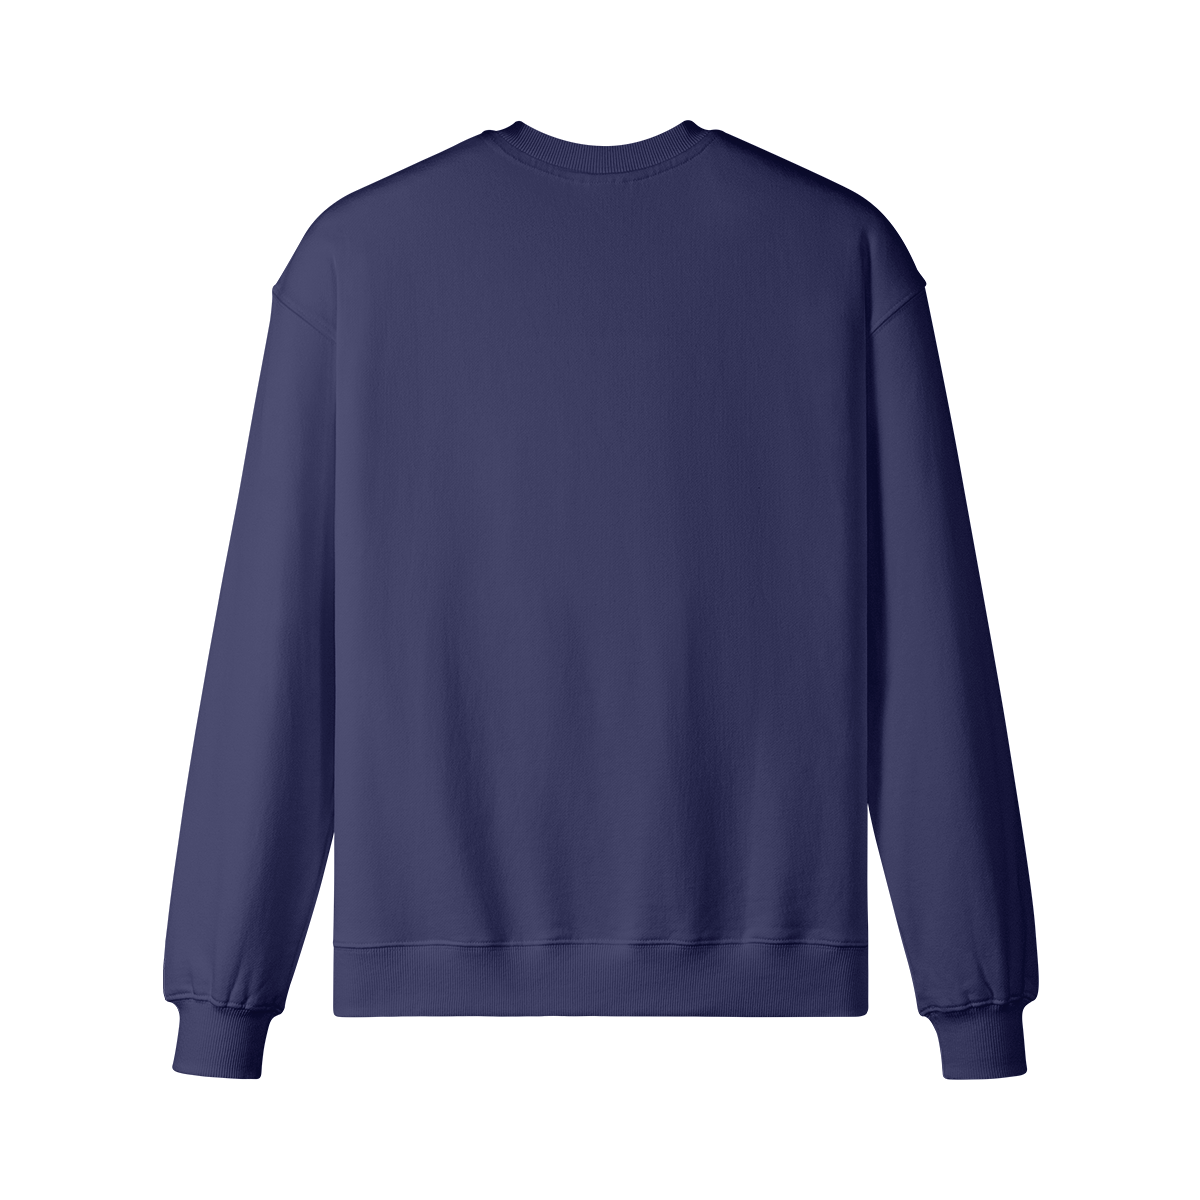 PSY SKULL - Unisex Oversized Sweatshirt